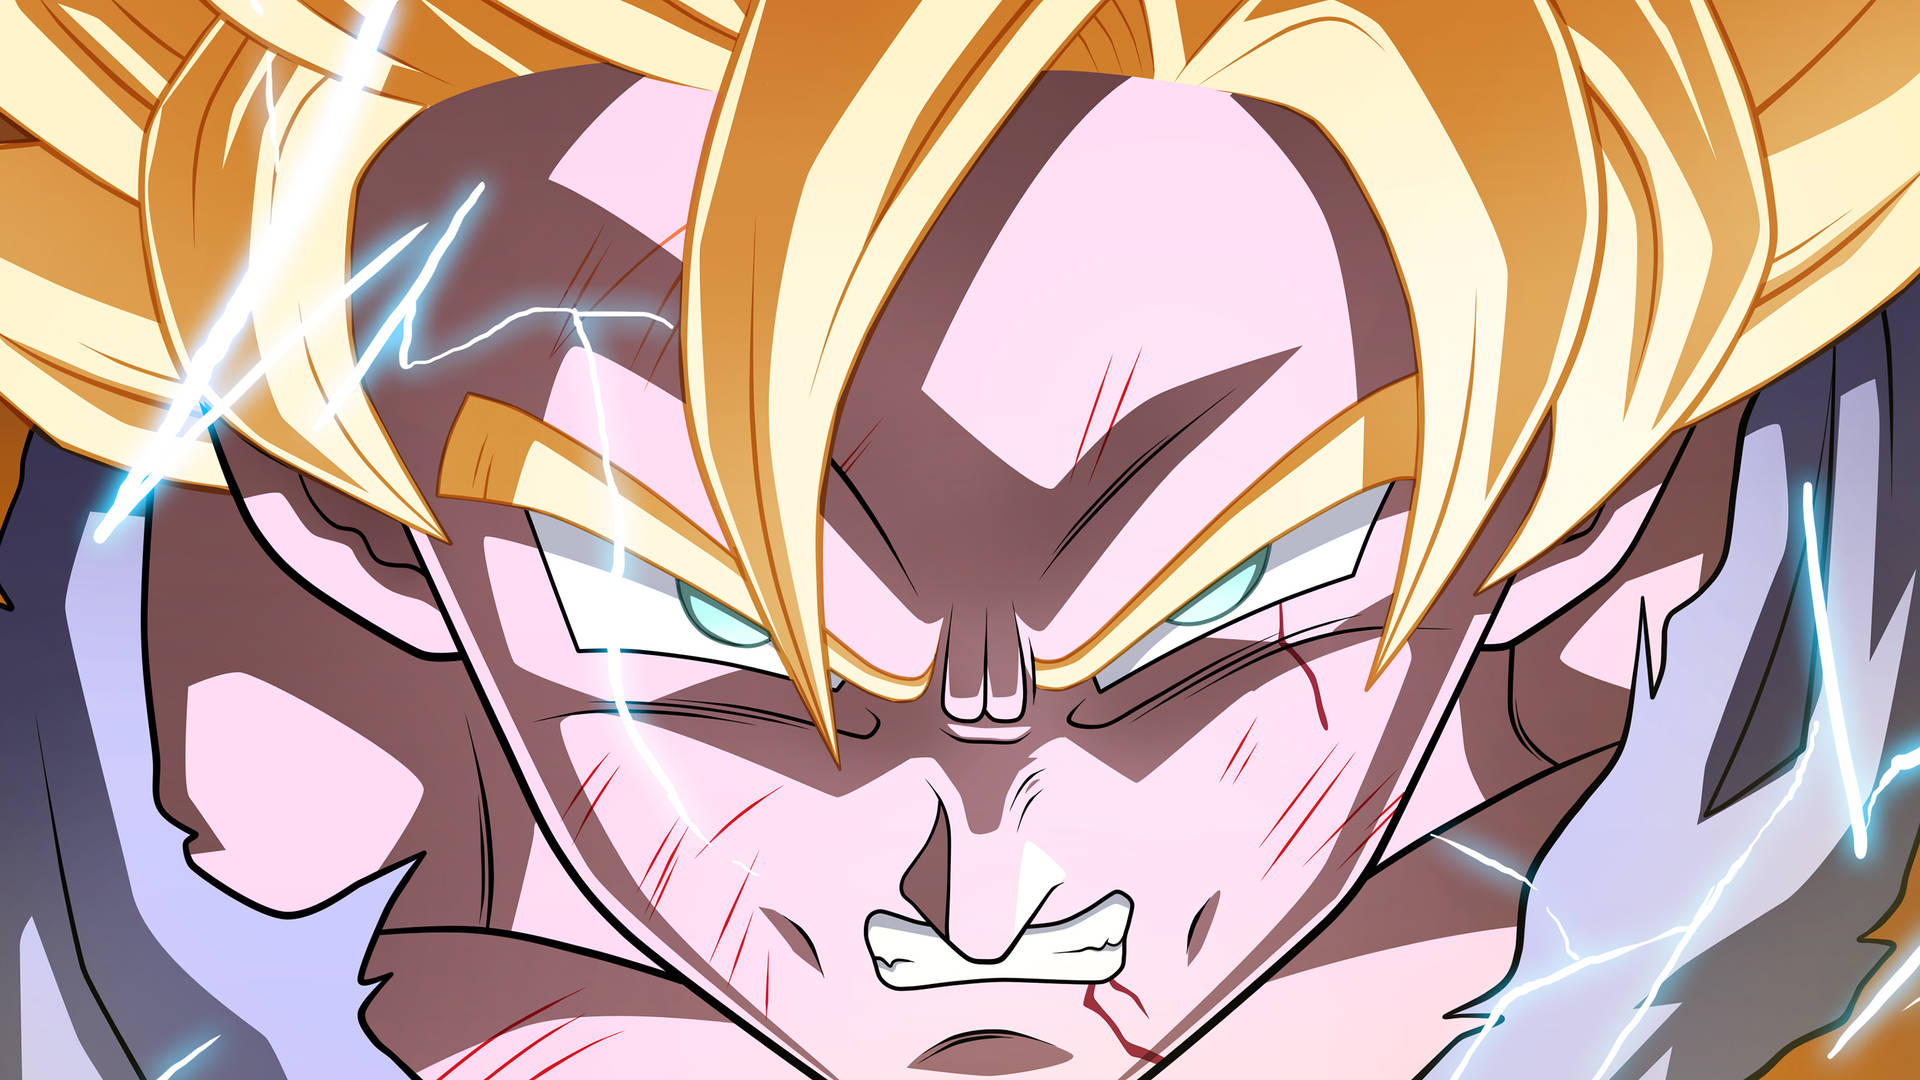 Bildsom Bakgrundsbild På Datorn Eller Mobilen: Super Saiyan Goku Anime-profil. Wallpaper